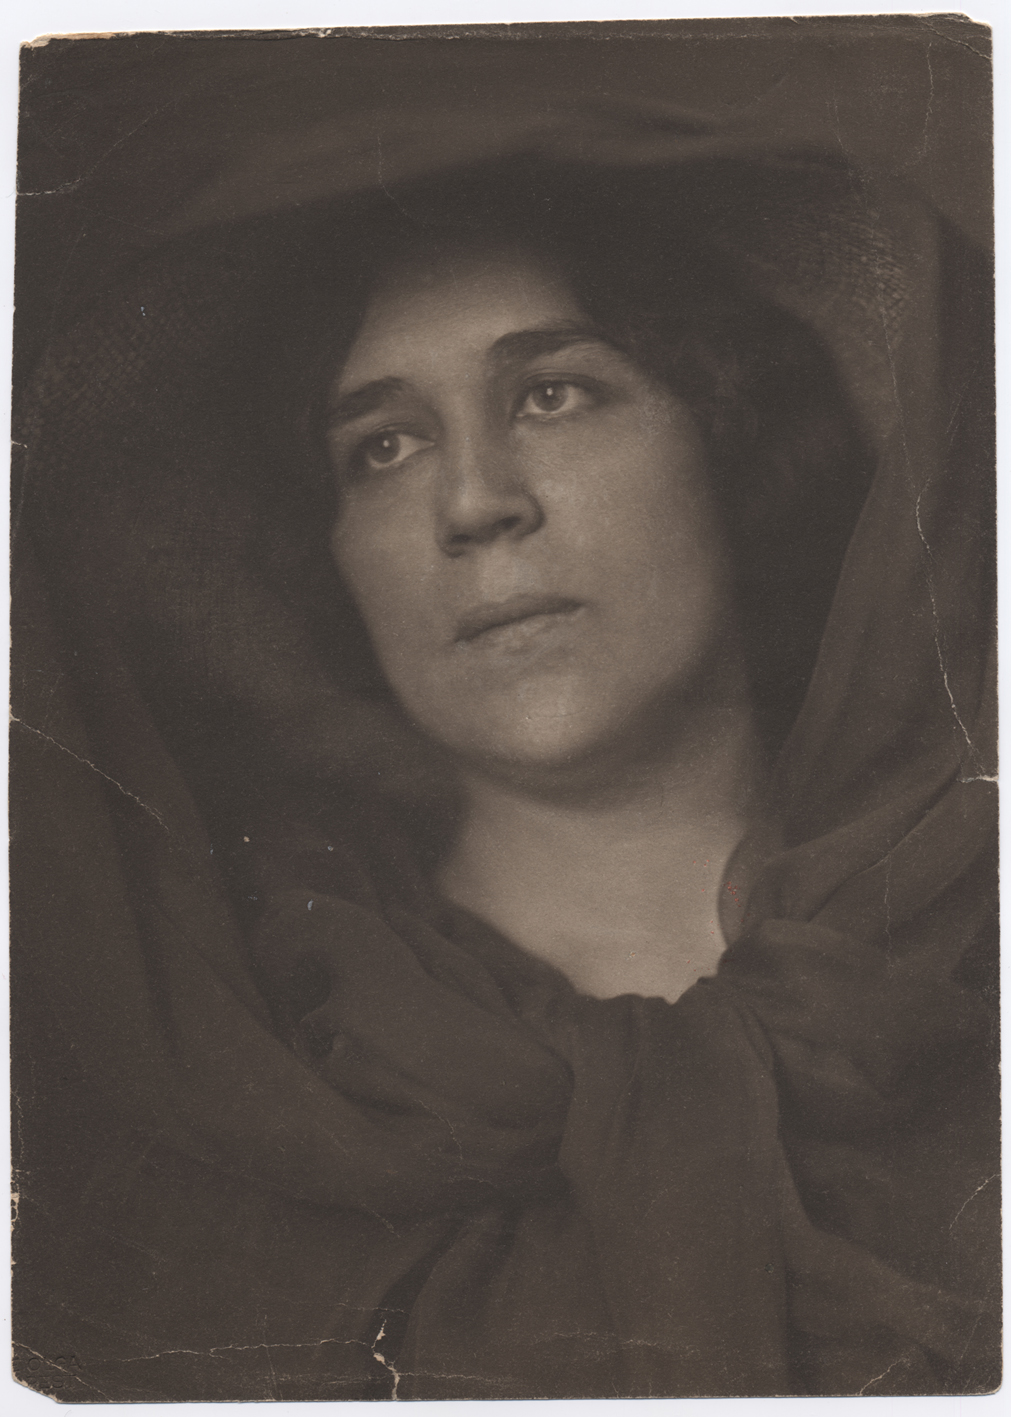 Dr. Dienes Valéria 1912 körül Máté Olga felvétele